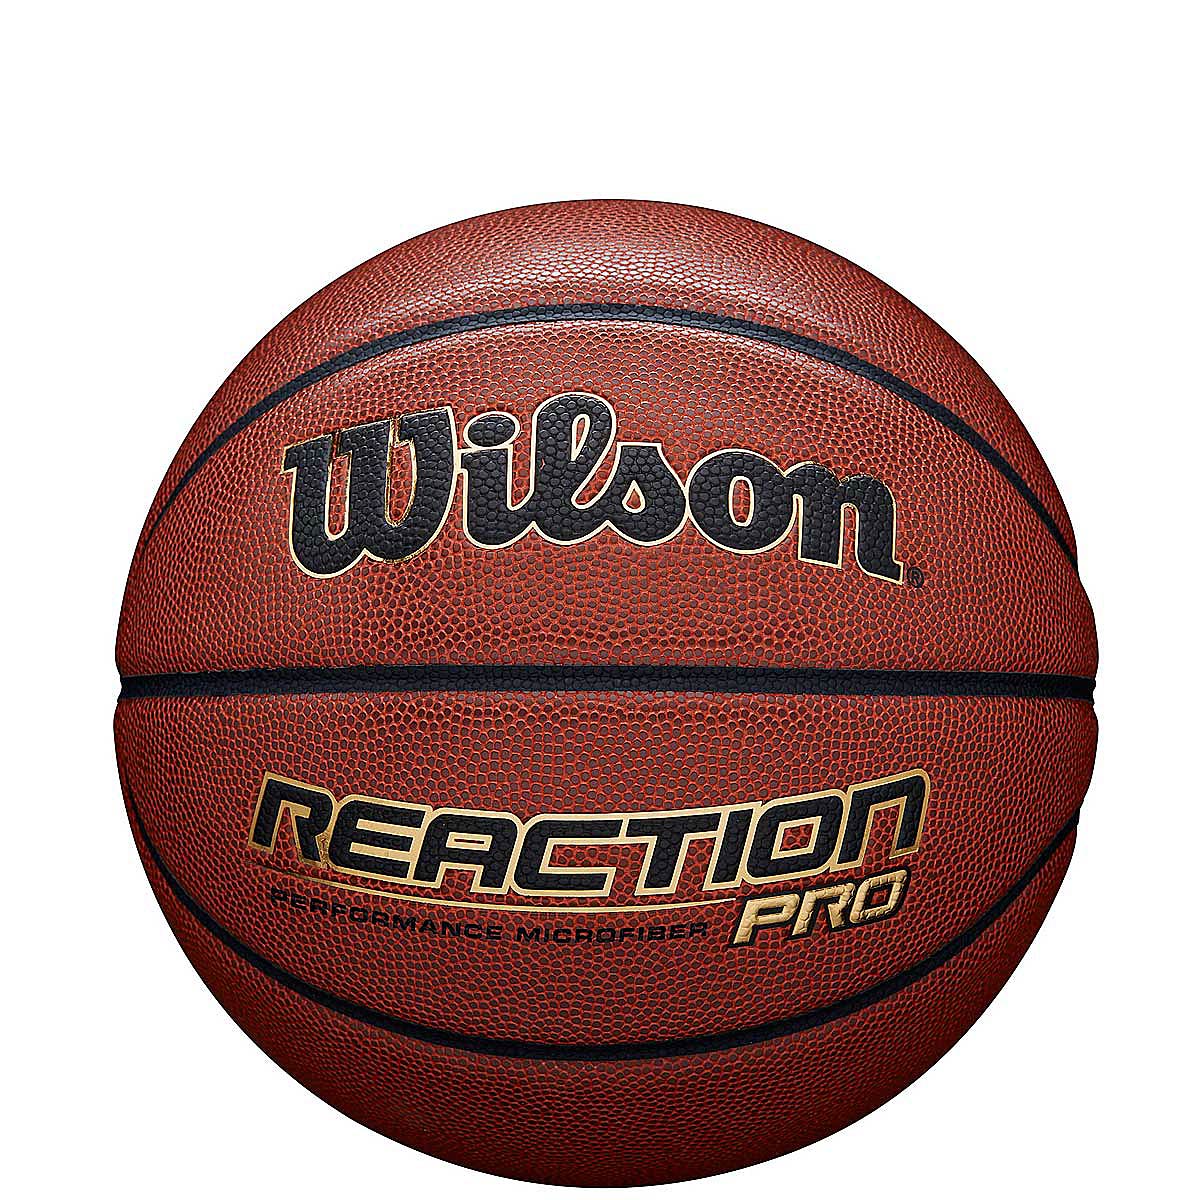 Image of Wilson Reaction Pro 275 Basketball, Brown